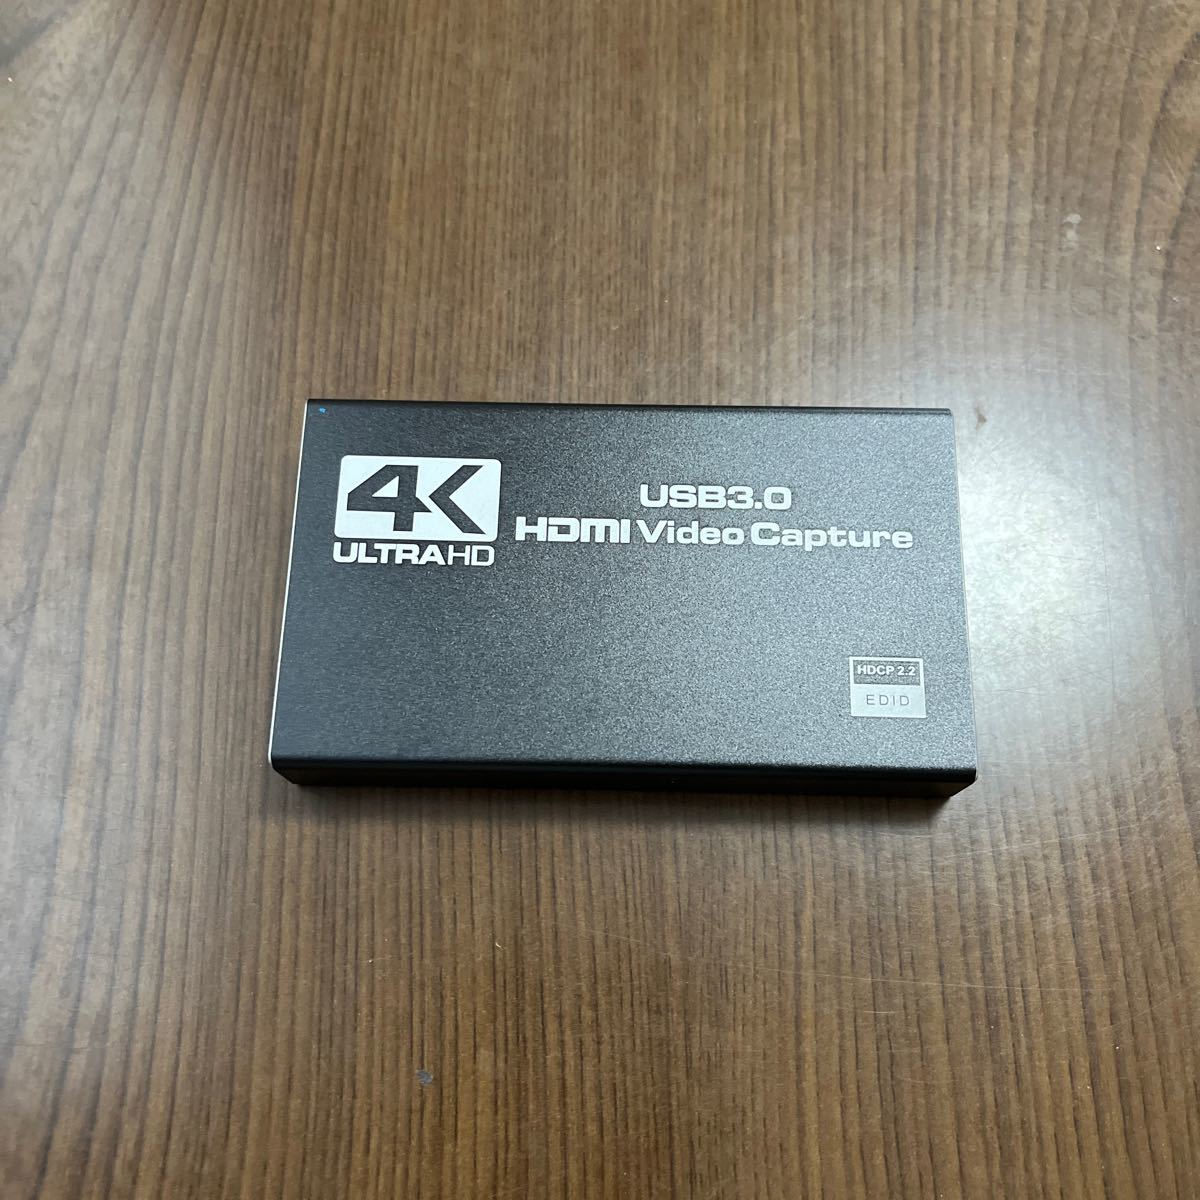 601p0312☆ 4K HDMI パススルー キャプチャーボード Switch対応 1080P 60FPS USB3.0 ビデオゲーム ゲーム実況 ビデオ録画 